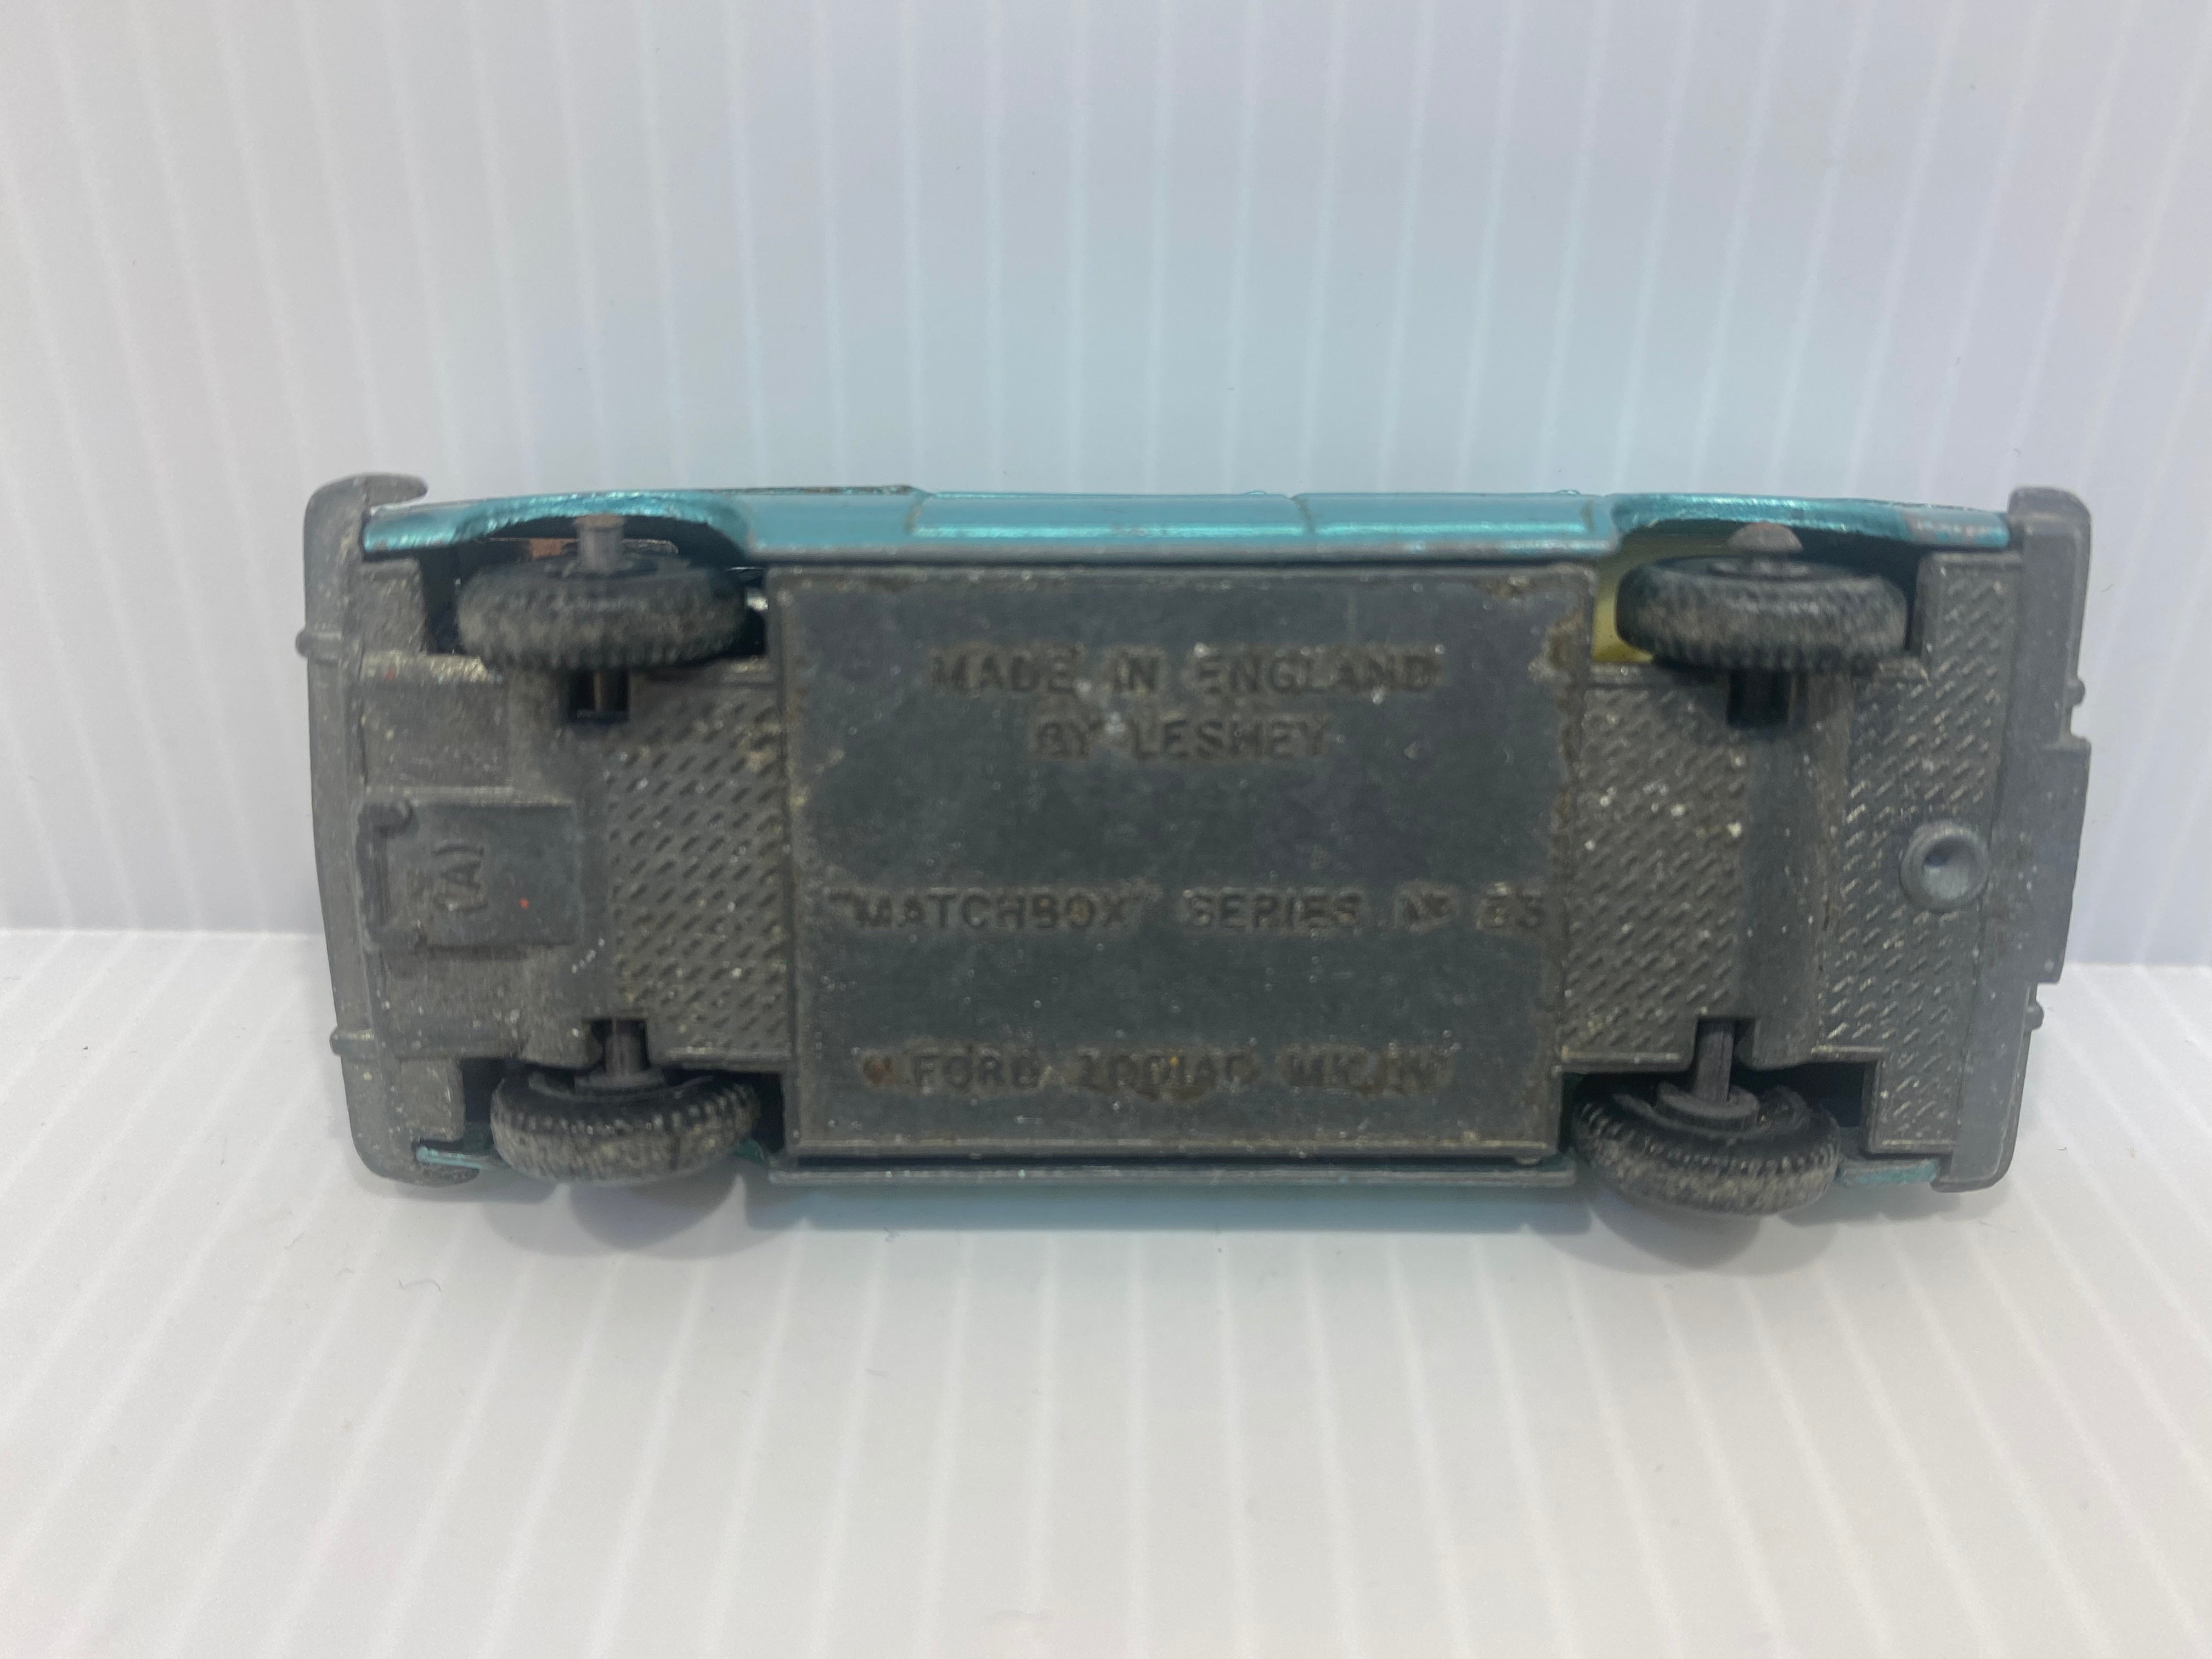 Matchbox Ford Zodiac MK IV  with original box